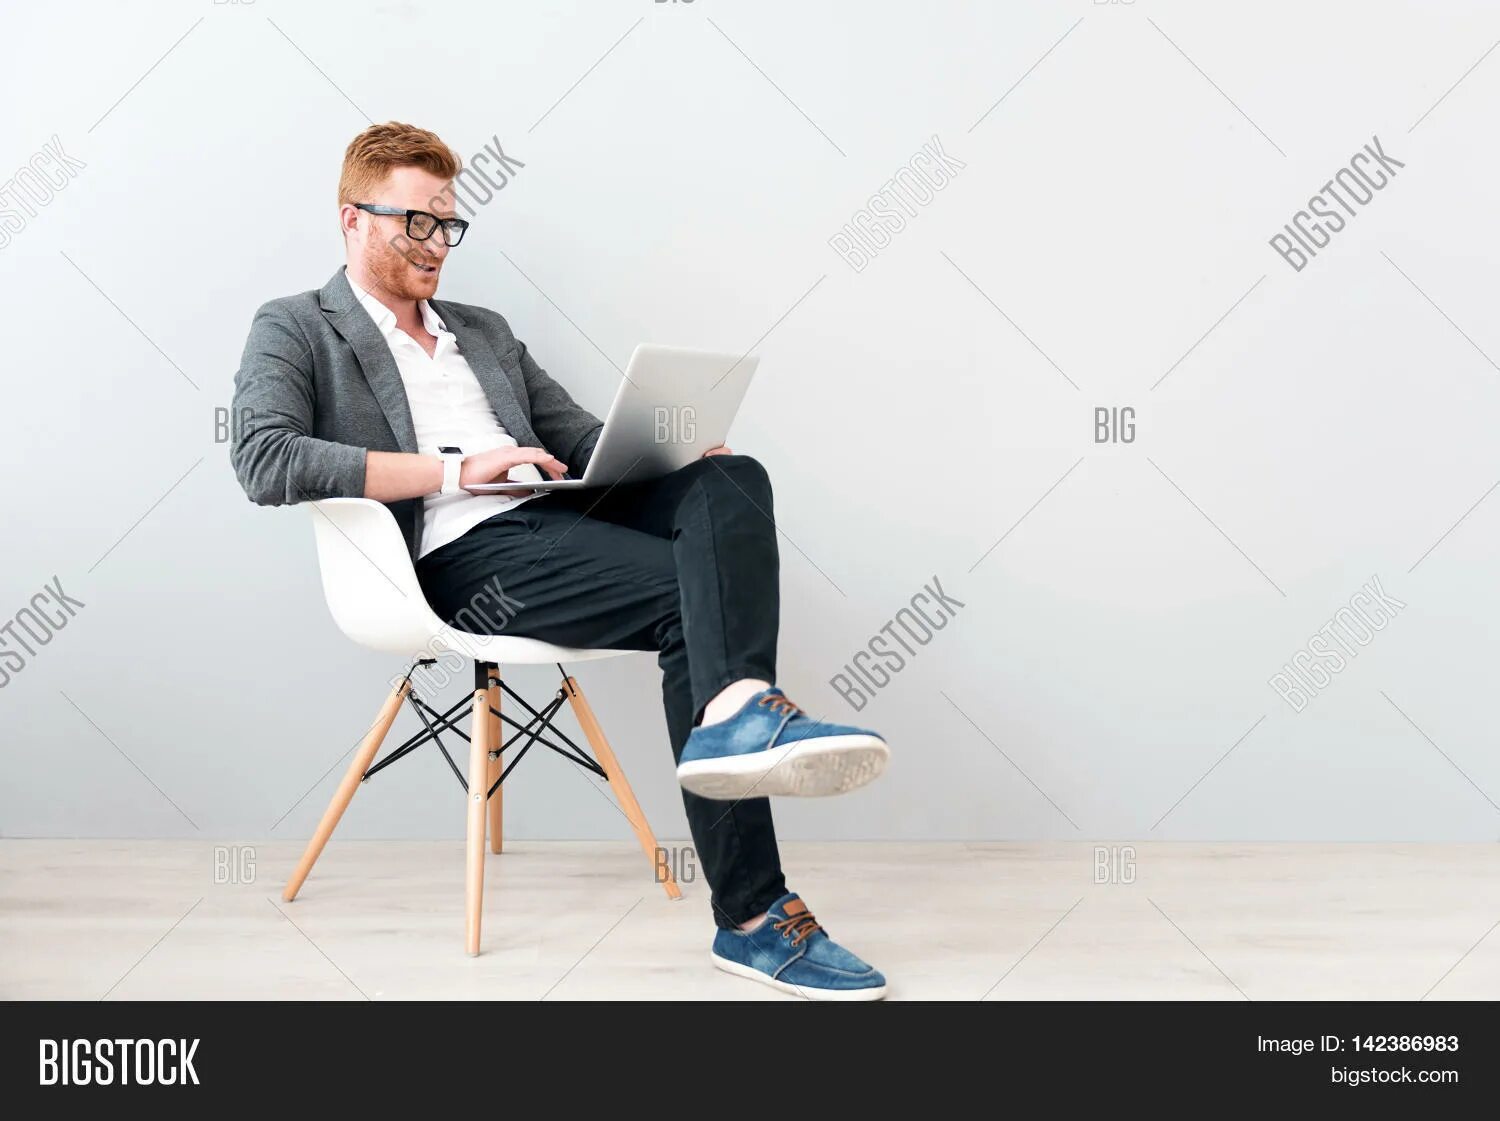 Мужчина в кресле с ноутбуком. Бизнесмен с ноутбуком. Довольный мужчина с ноутбуком в кресле. Мужчина сидит в кресле.